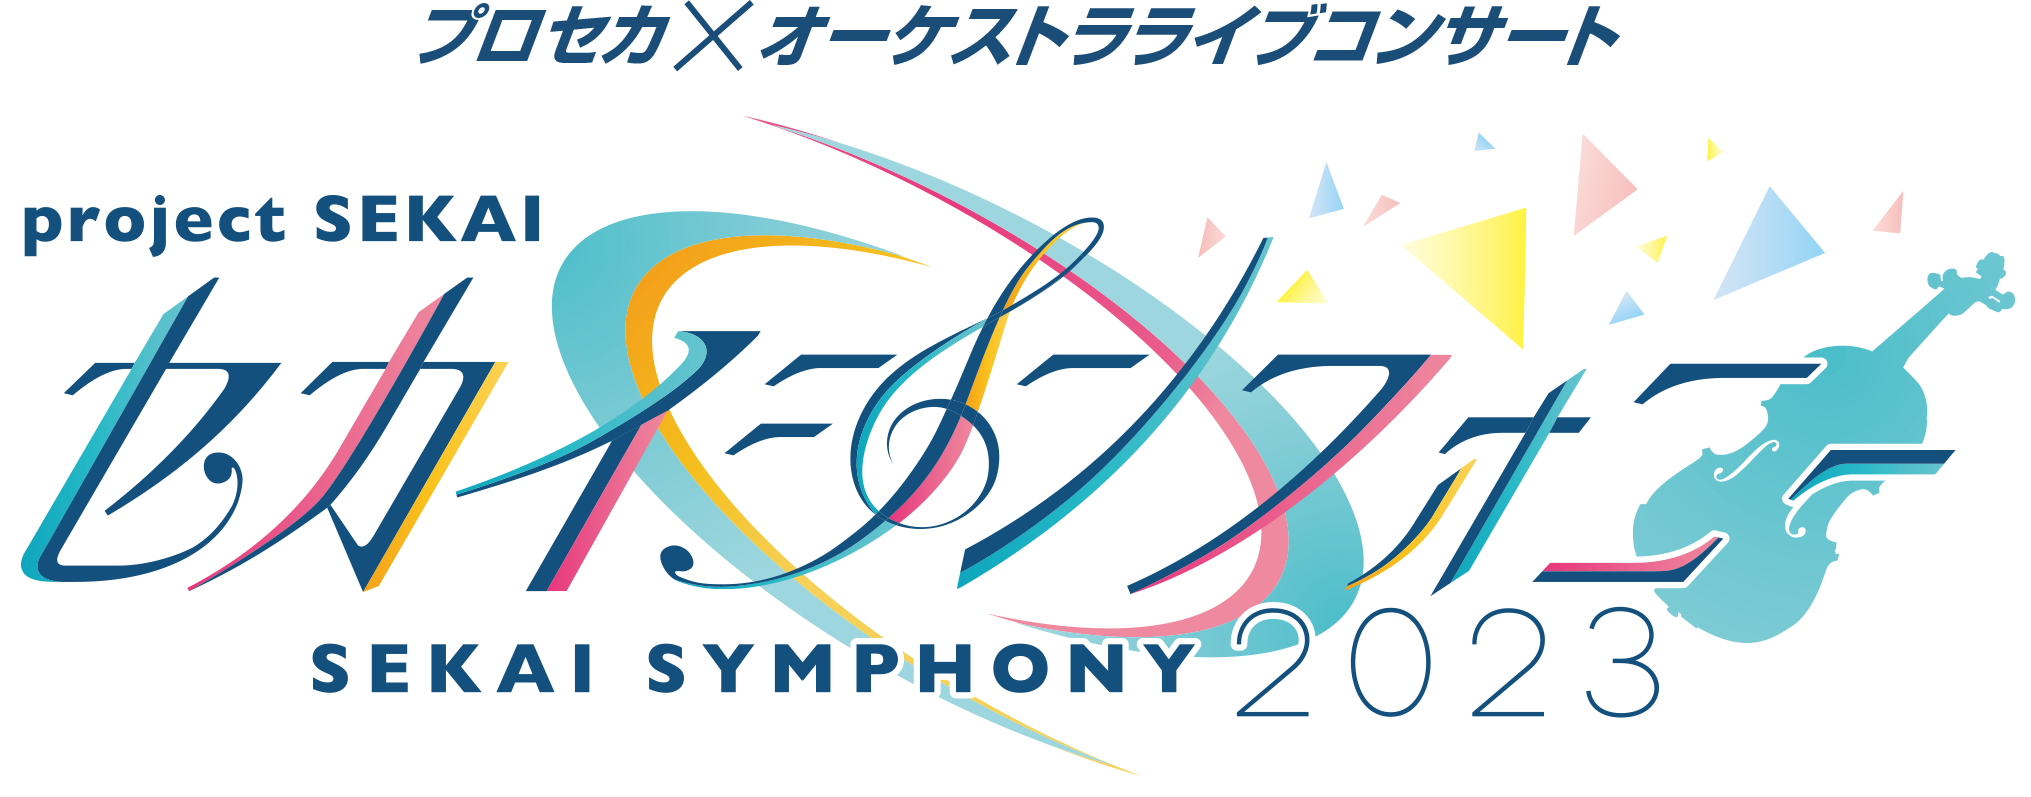 Sekaisymphony2023 logo.png